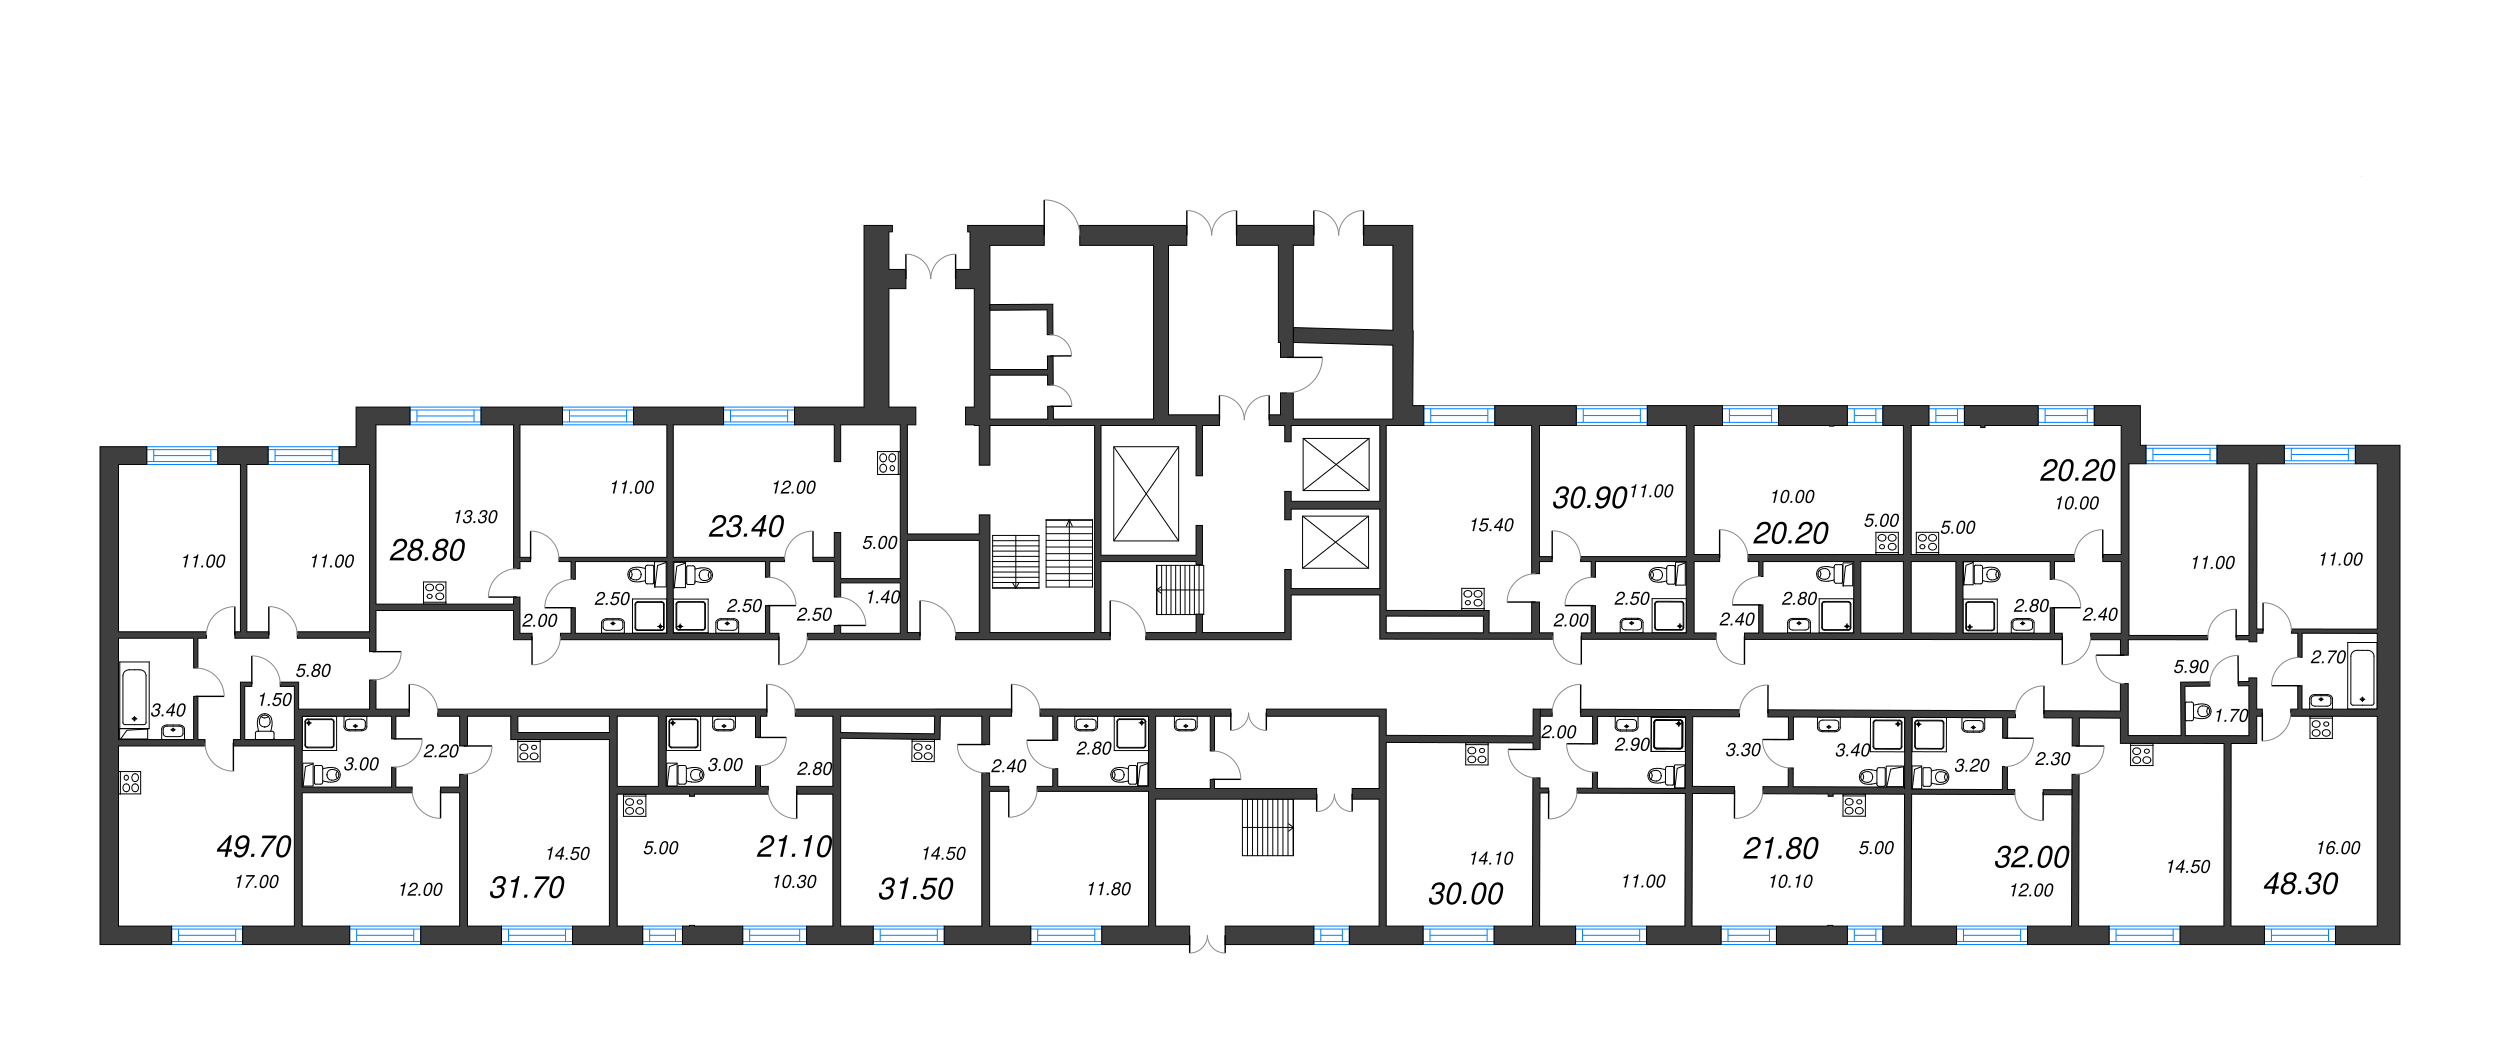 2-комнатная (Евро) квартира, 30.9 м² - планировка этажа